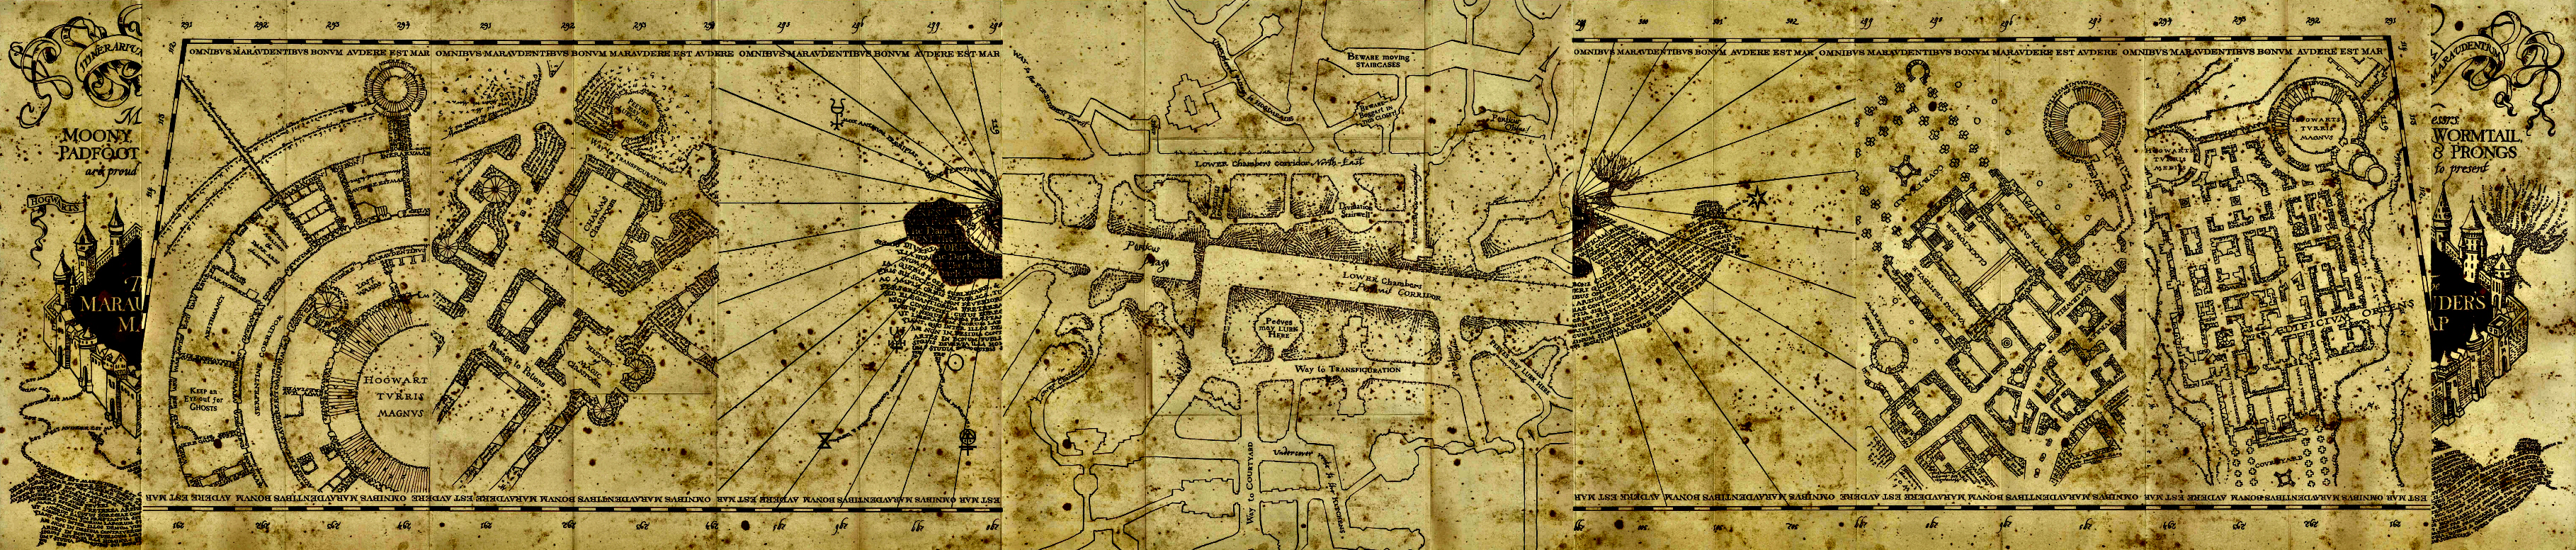 The Marauders Map by CiroGiso on DeviantArt